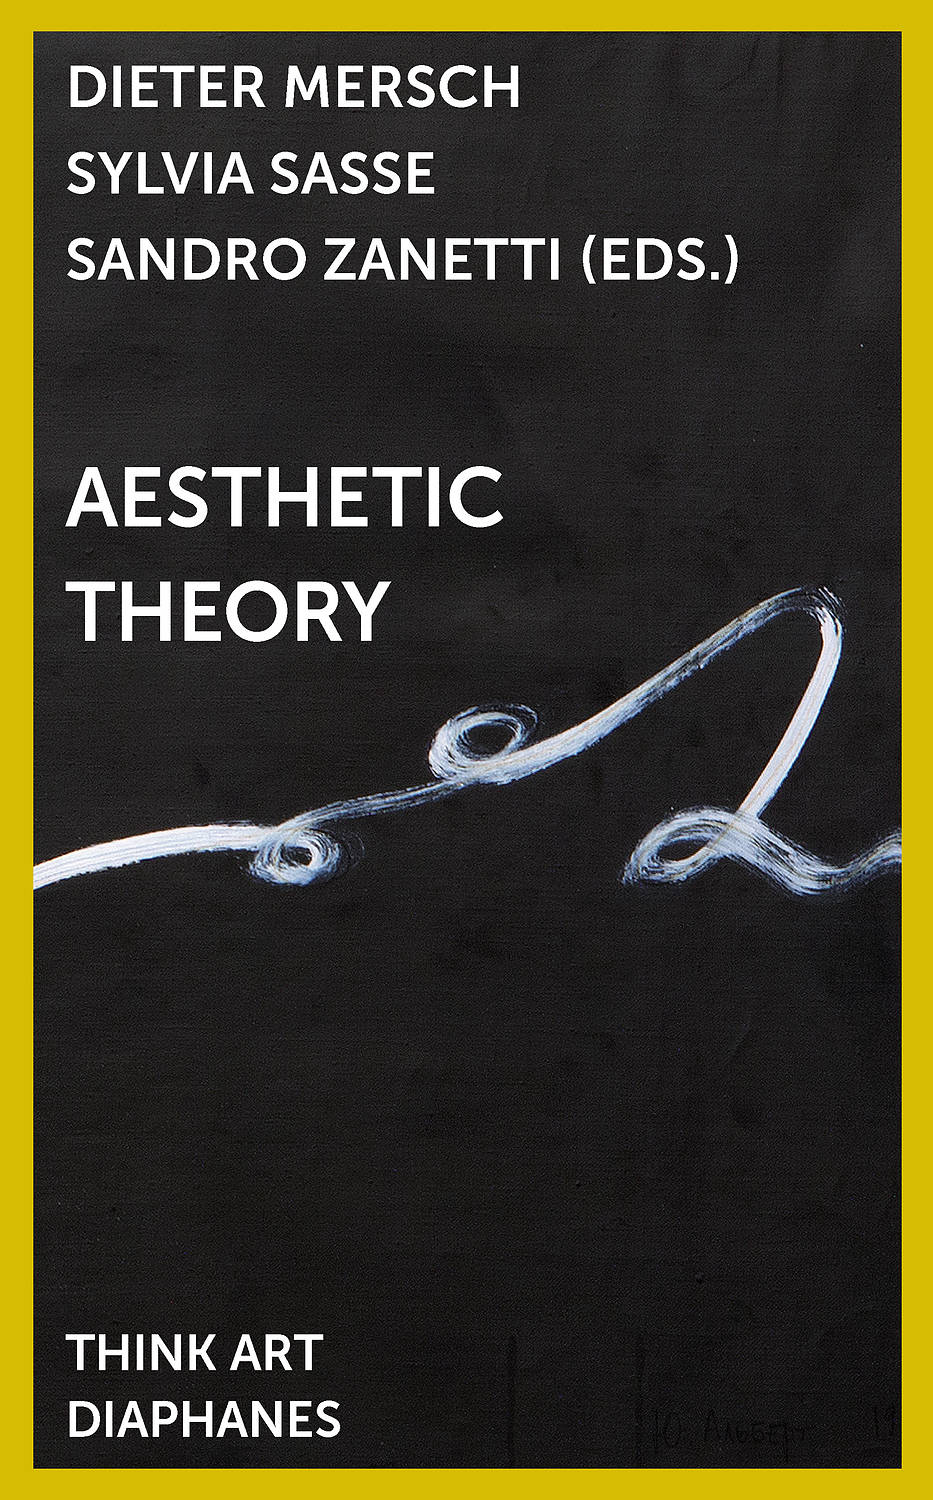 Buch: Dieter Mersch, Sylvia Sasse, Sandro Zanetti, Aesthetic Theory, Berlin/Zürich 2019.